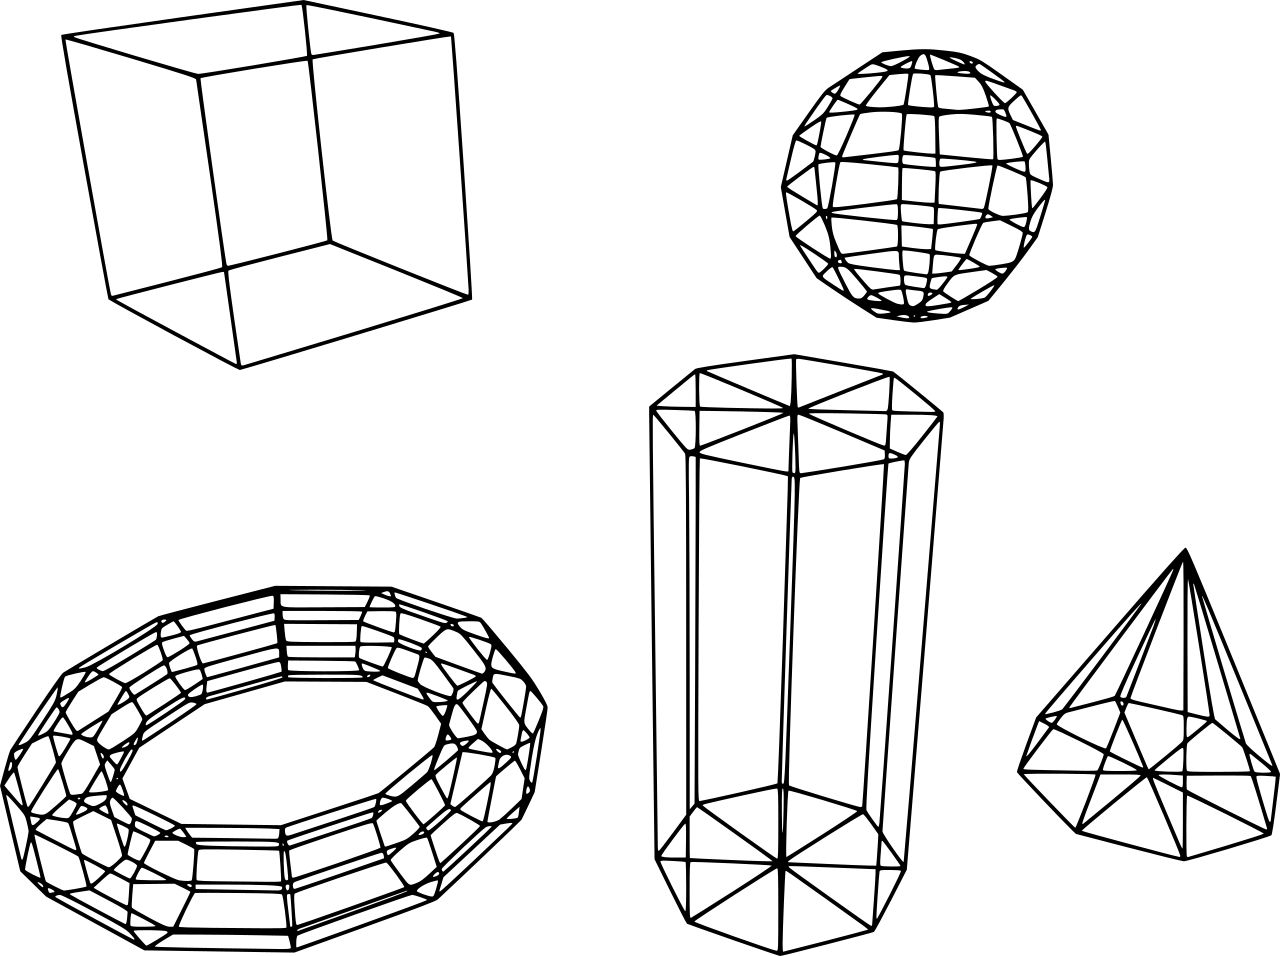 Omalovánka geometrické tvary k vytisknutí na A4